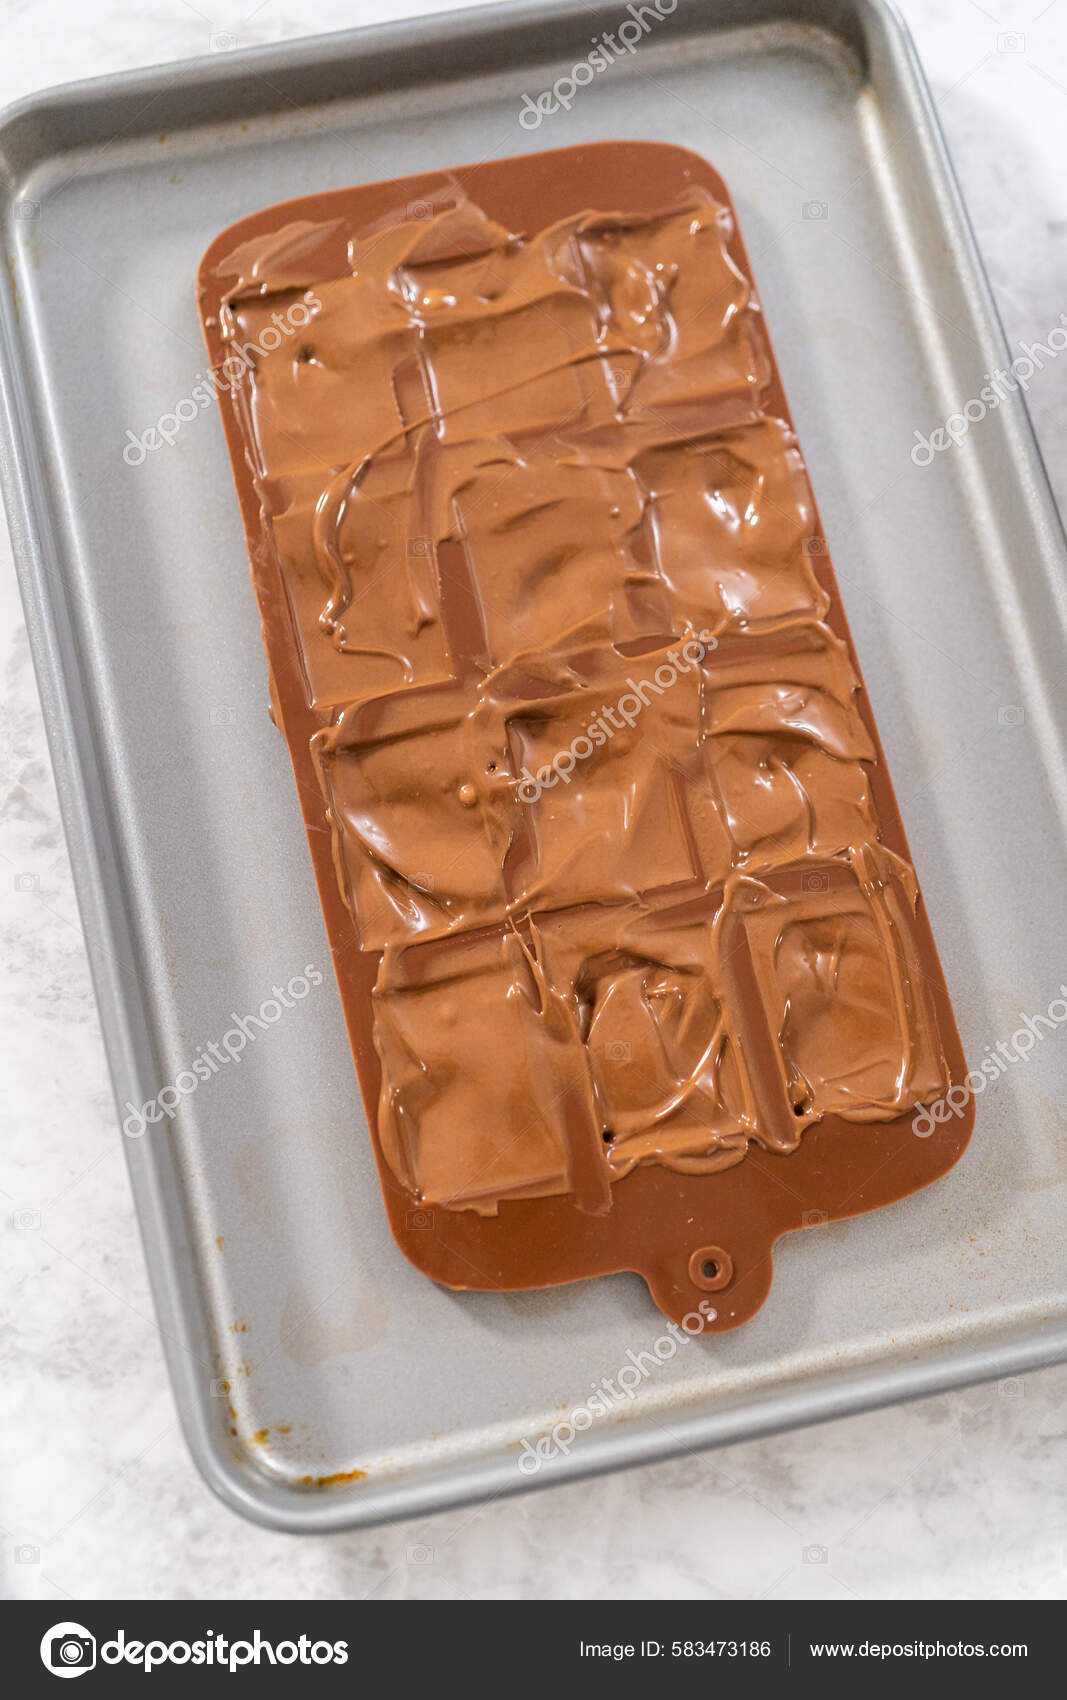 https://st.depositphotos.com/1118354/58347/i/1600/depositphotos_583473186-stock-photo-filling-chocolate-silicone-mold-melted.jpg